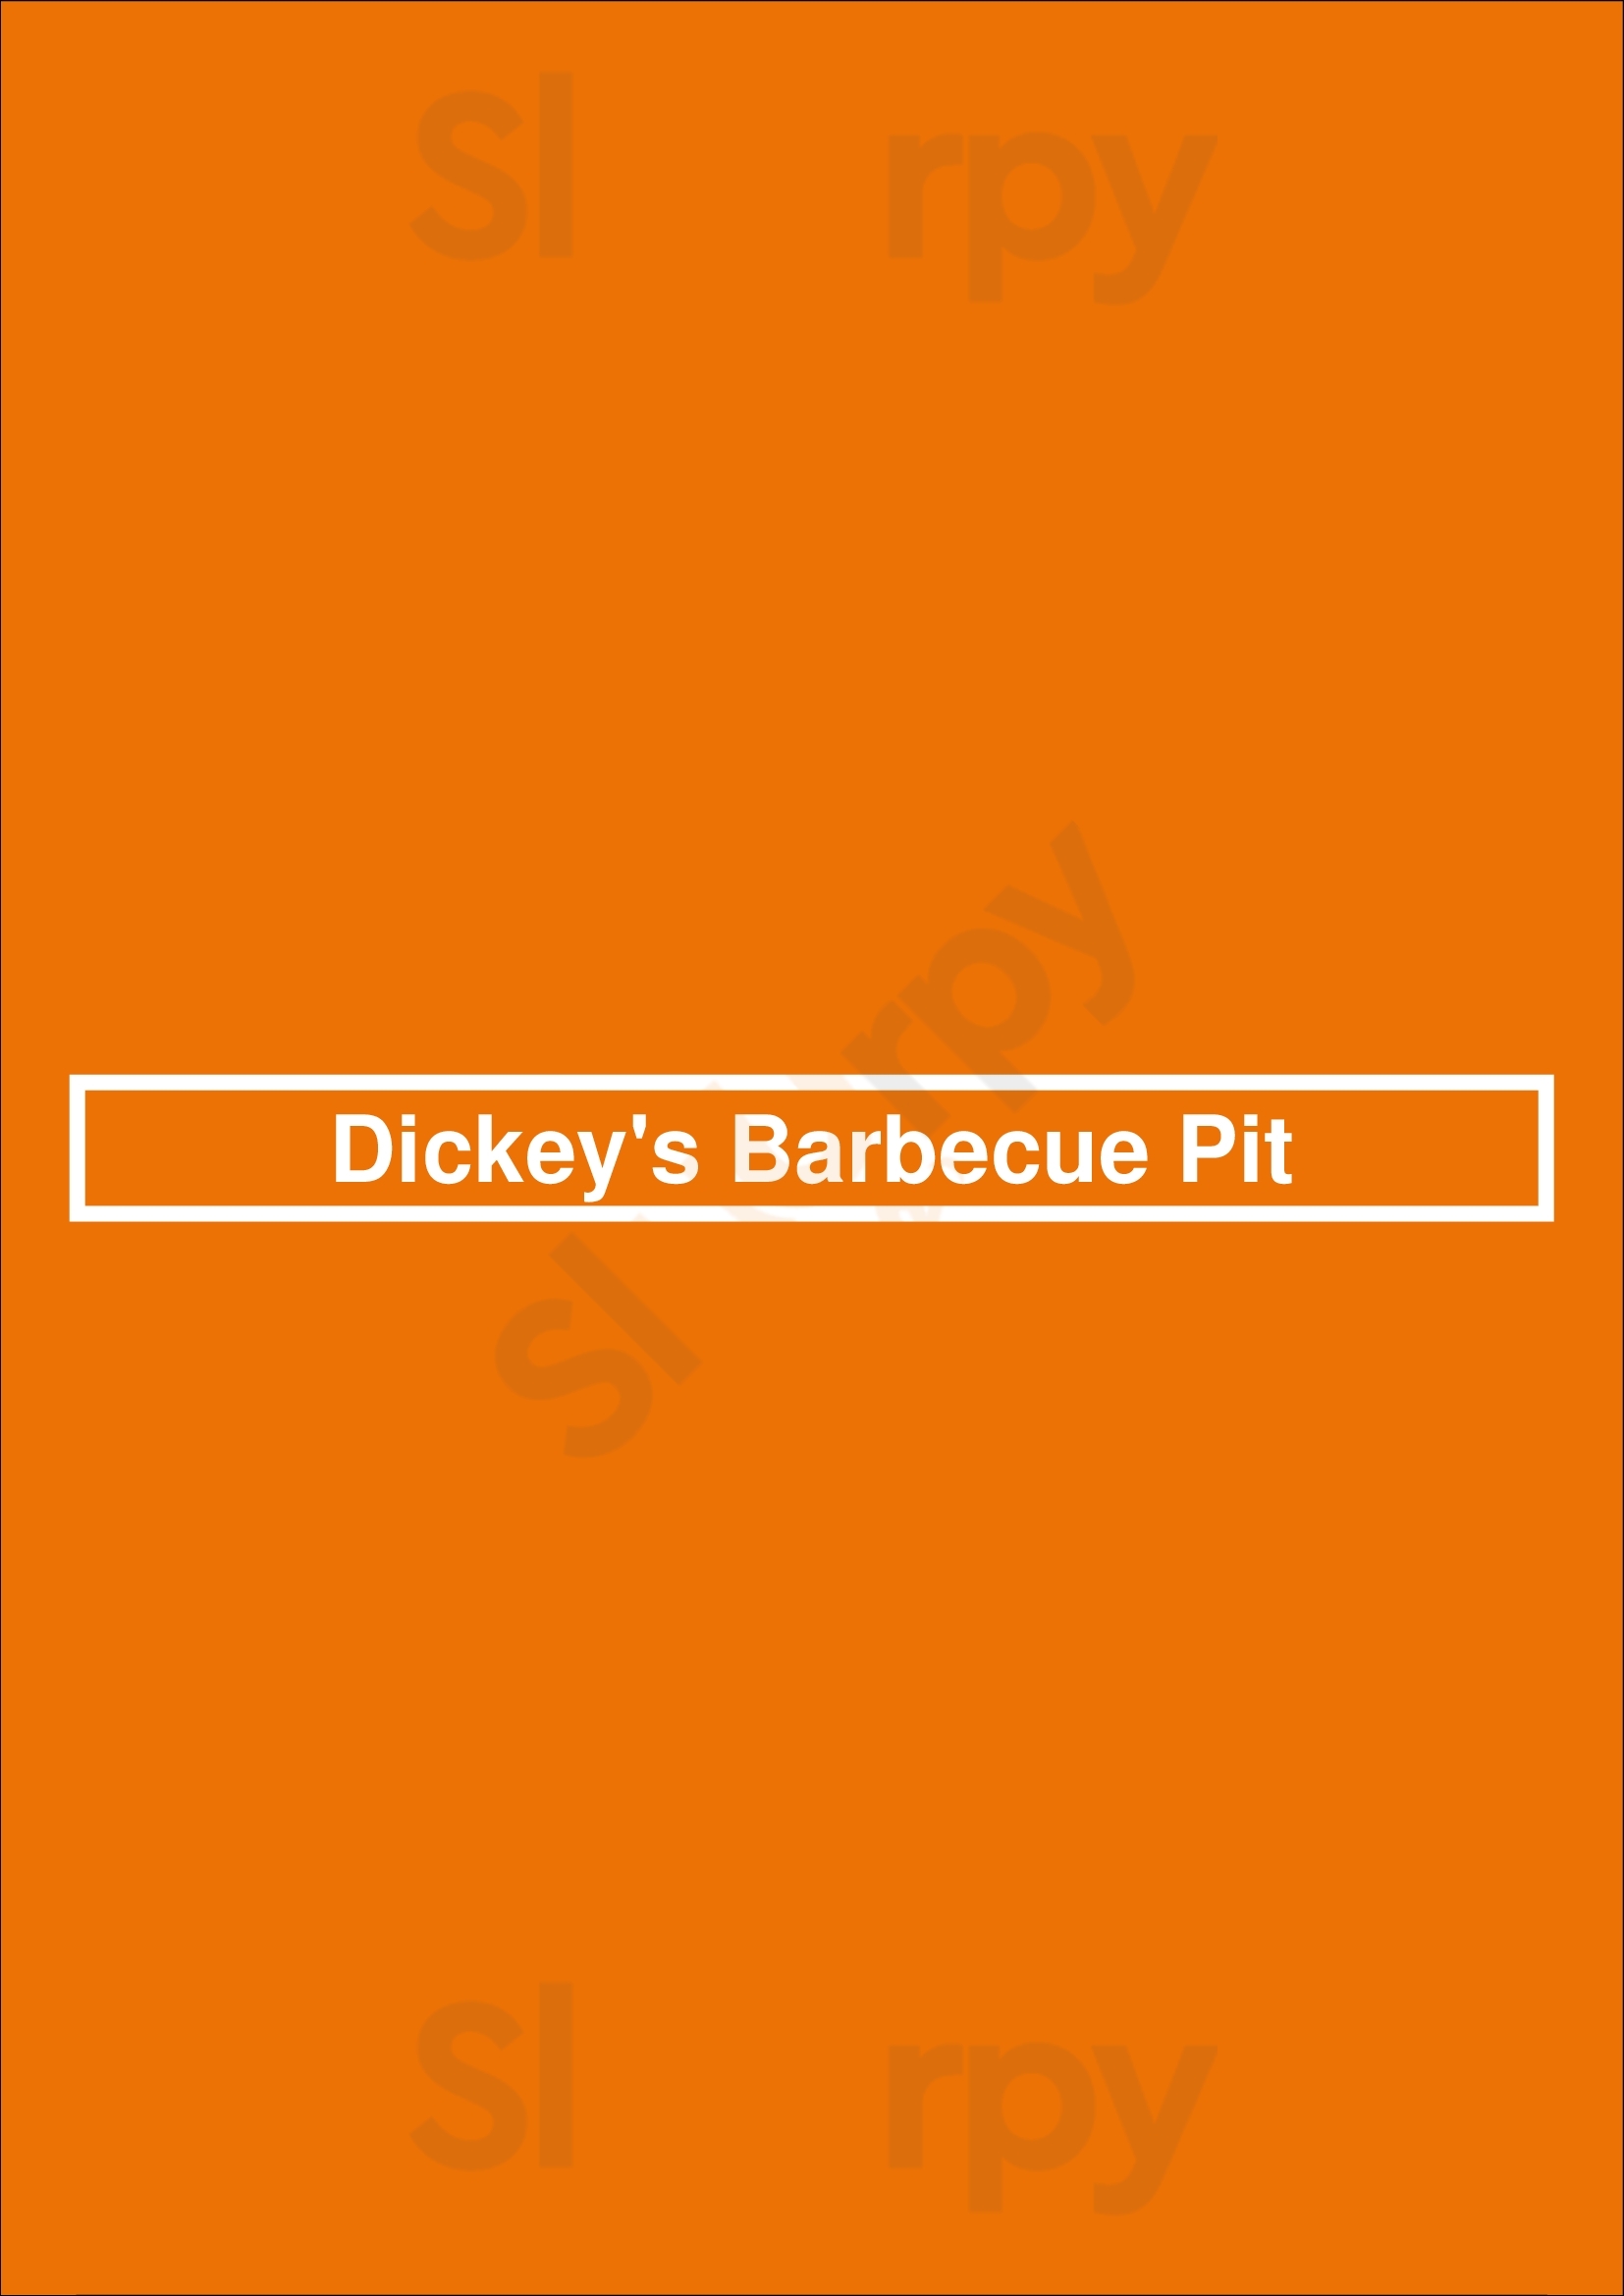 Dickey's Barbecue Pit Houston Menu - 1